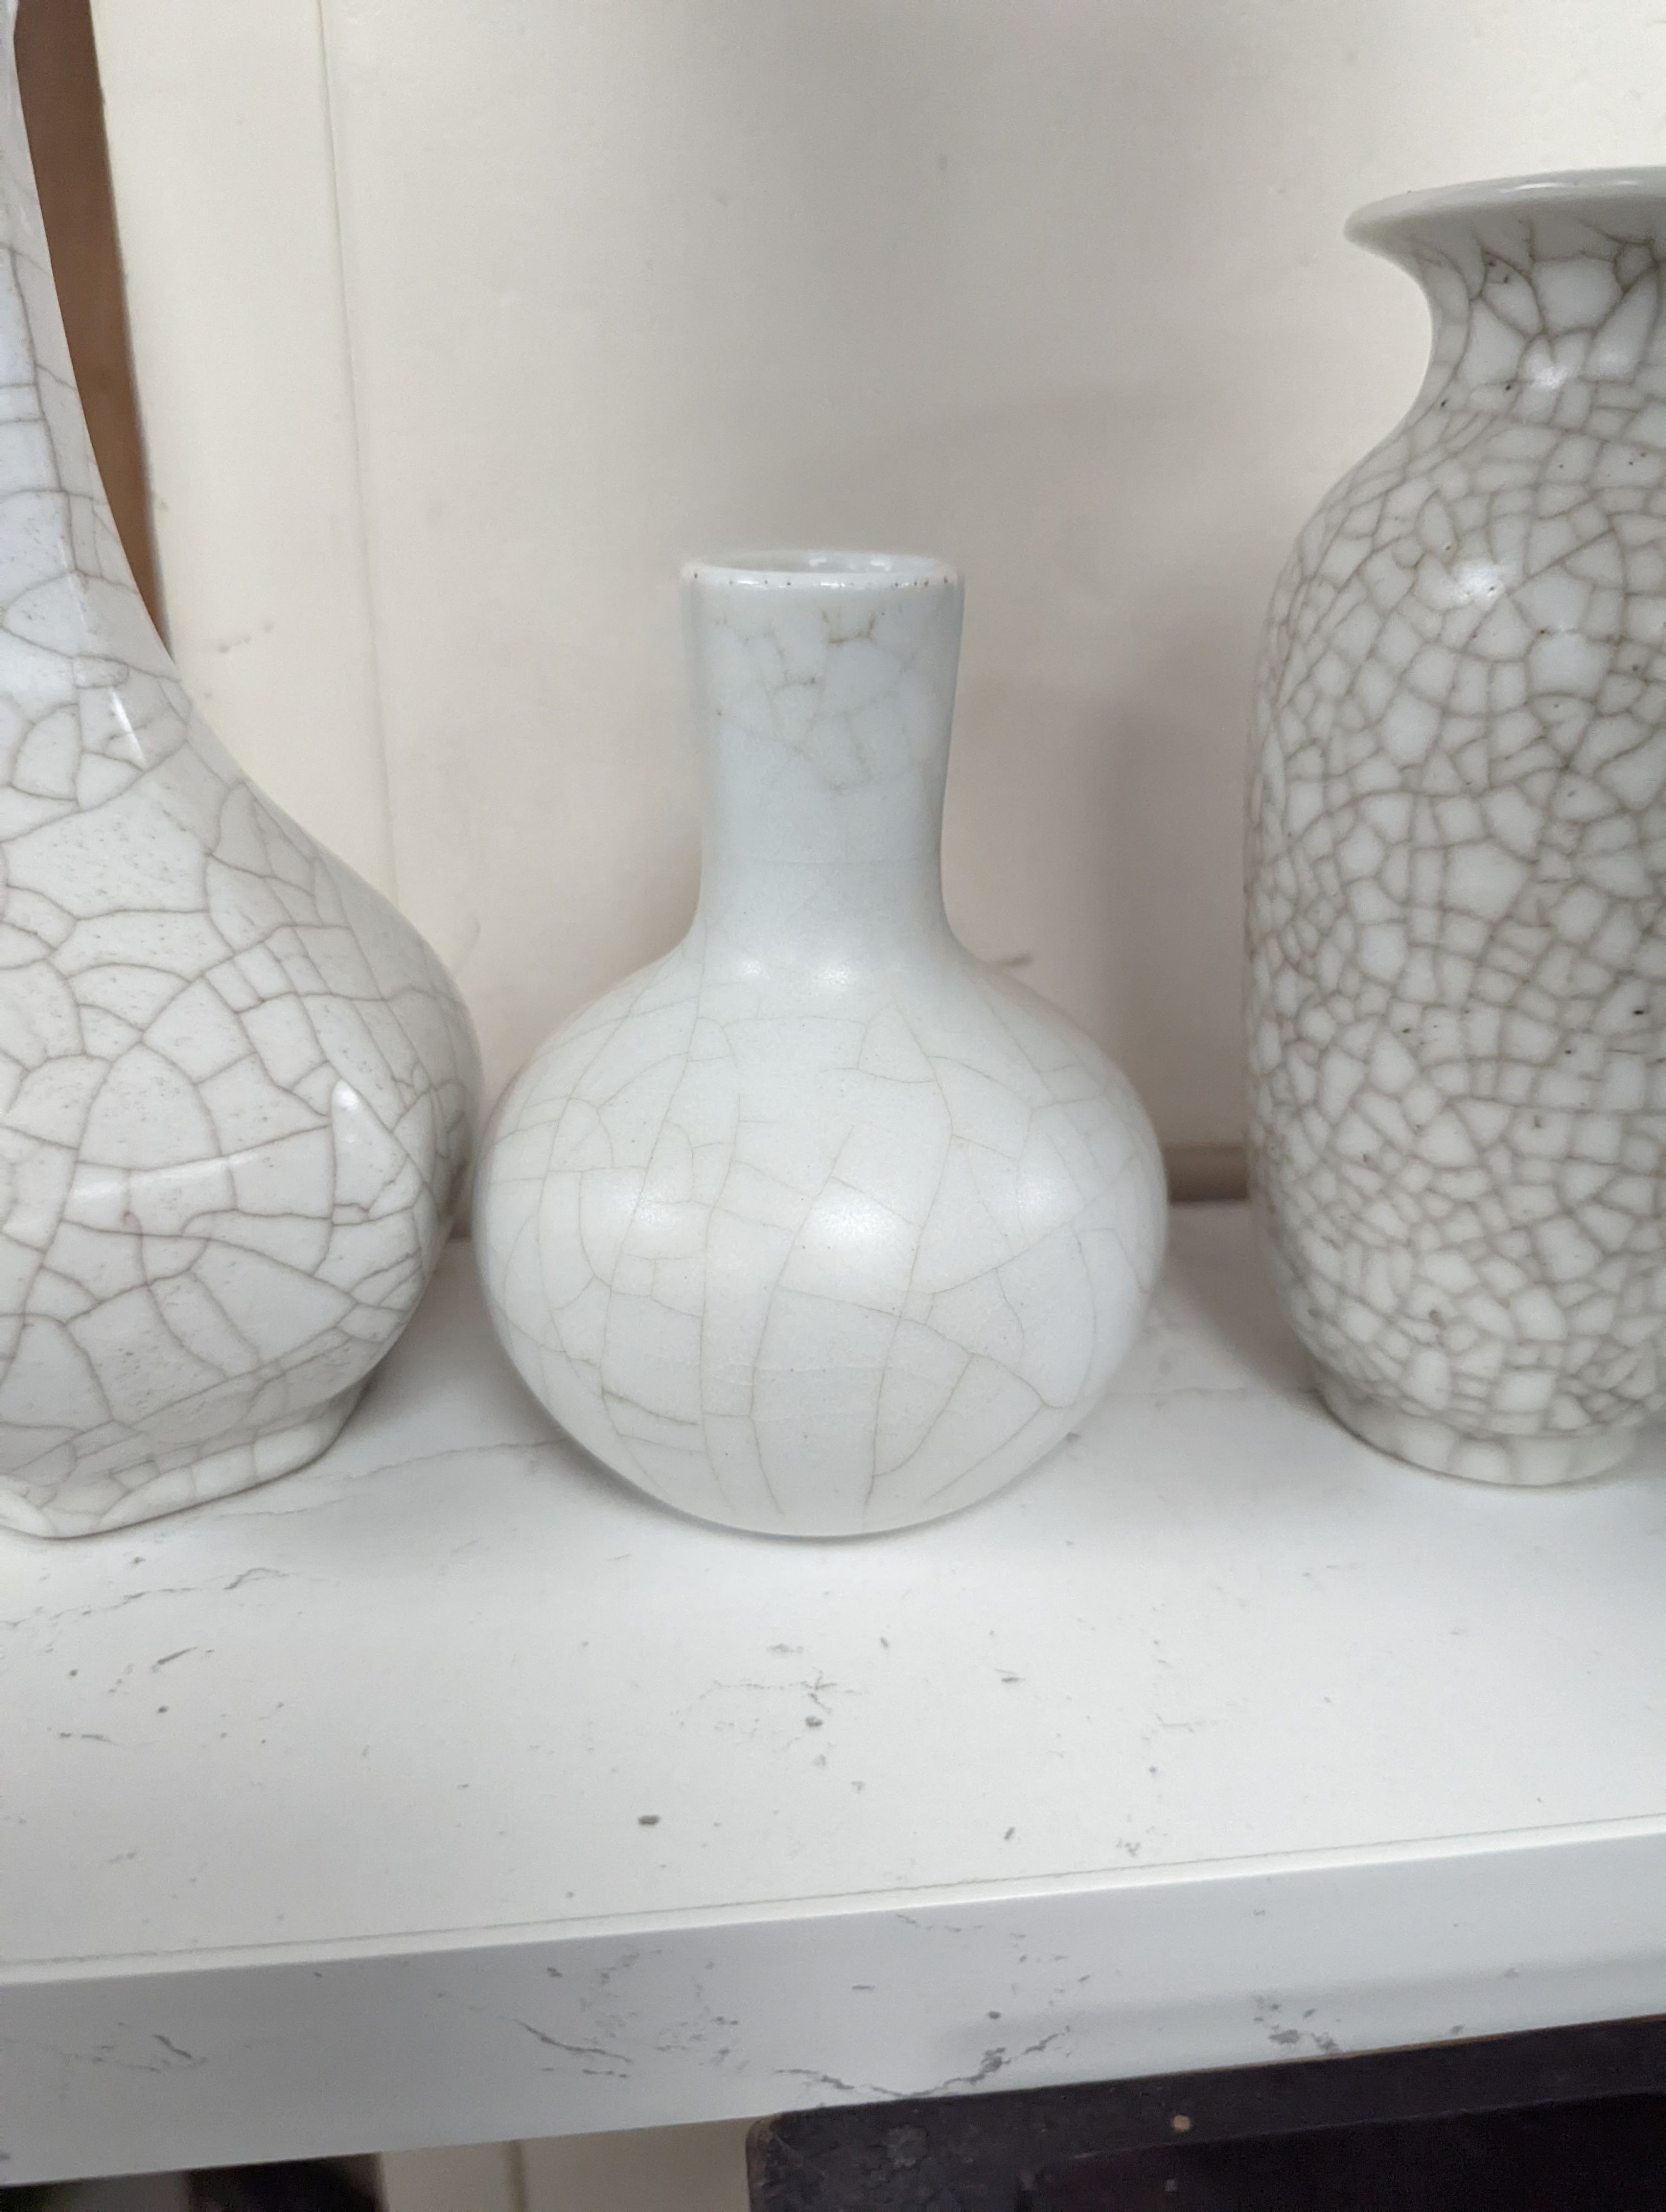 Four Chinese crackle glaze vases, tallest 16 cms high.